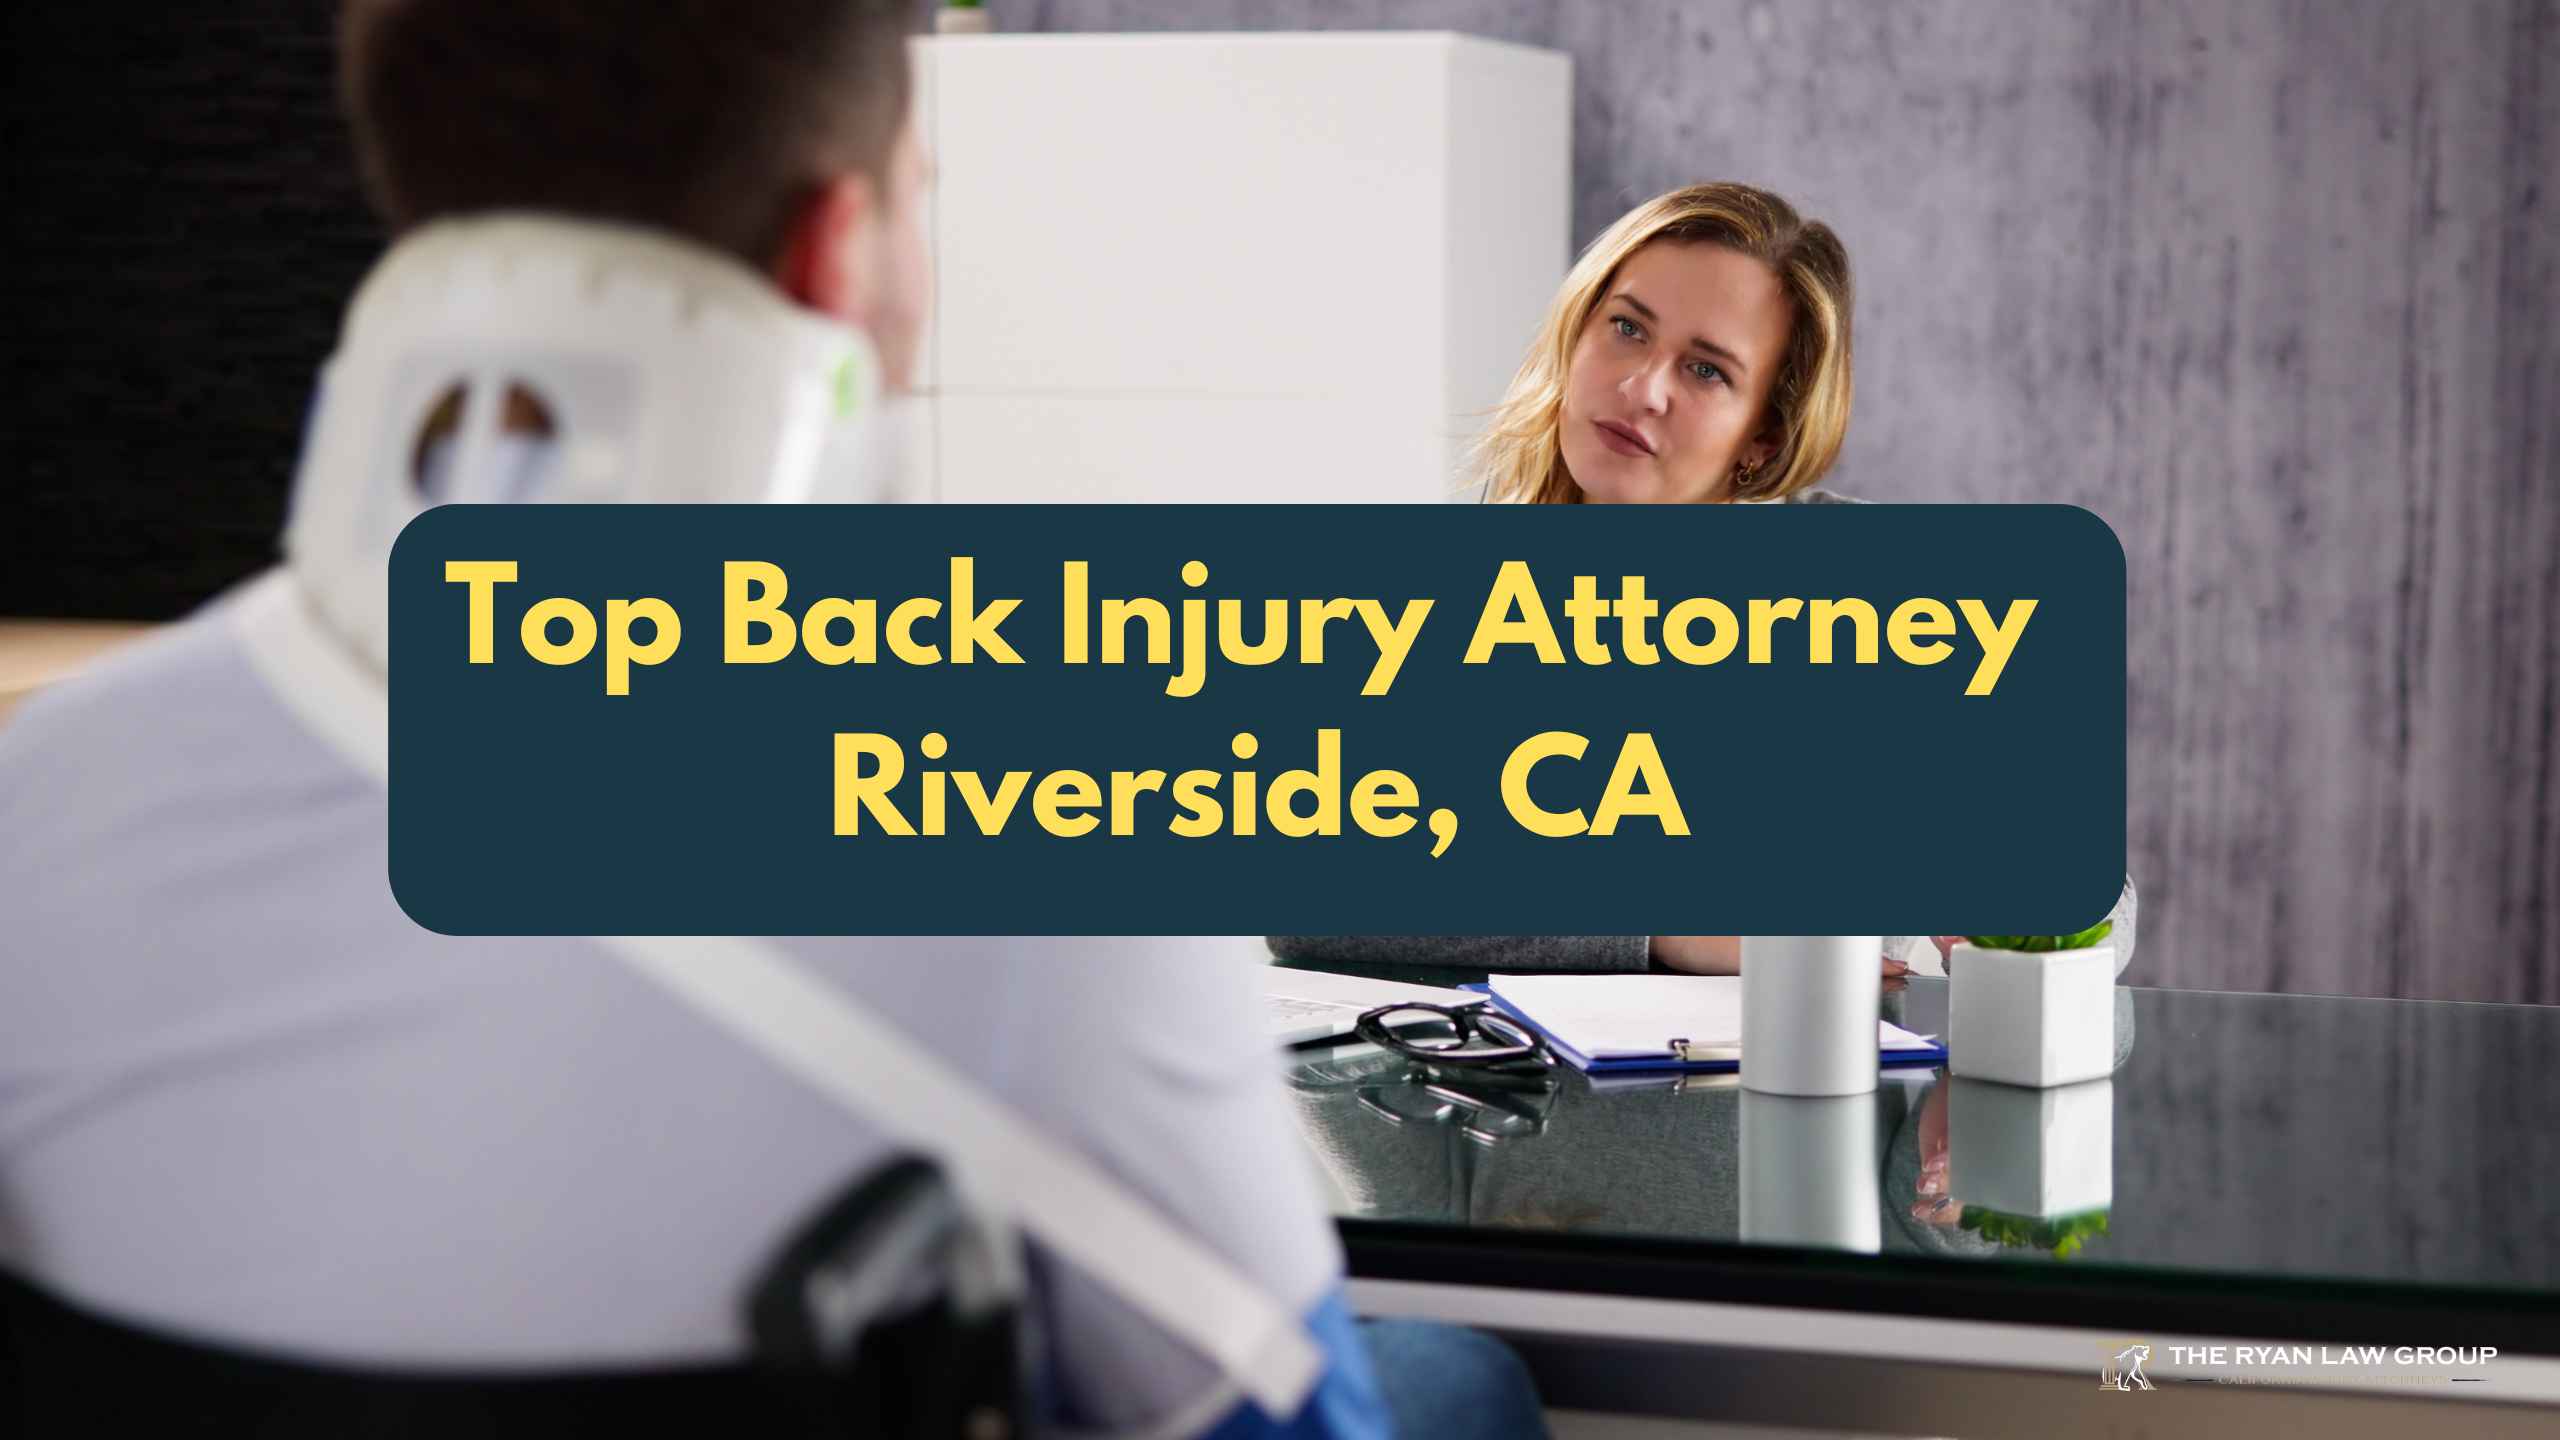 Top Back Injury Attorney Riverside, CA